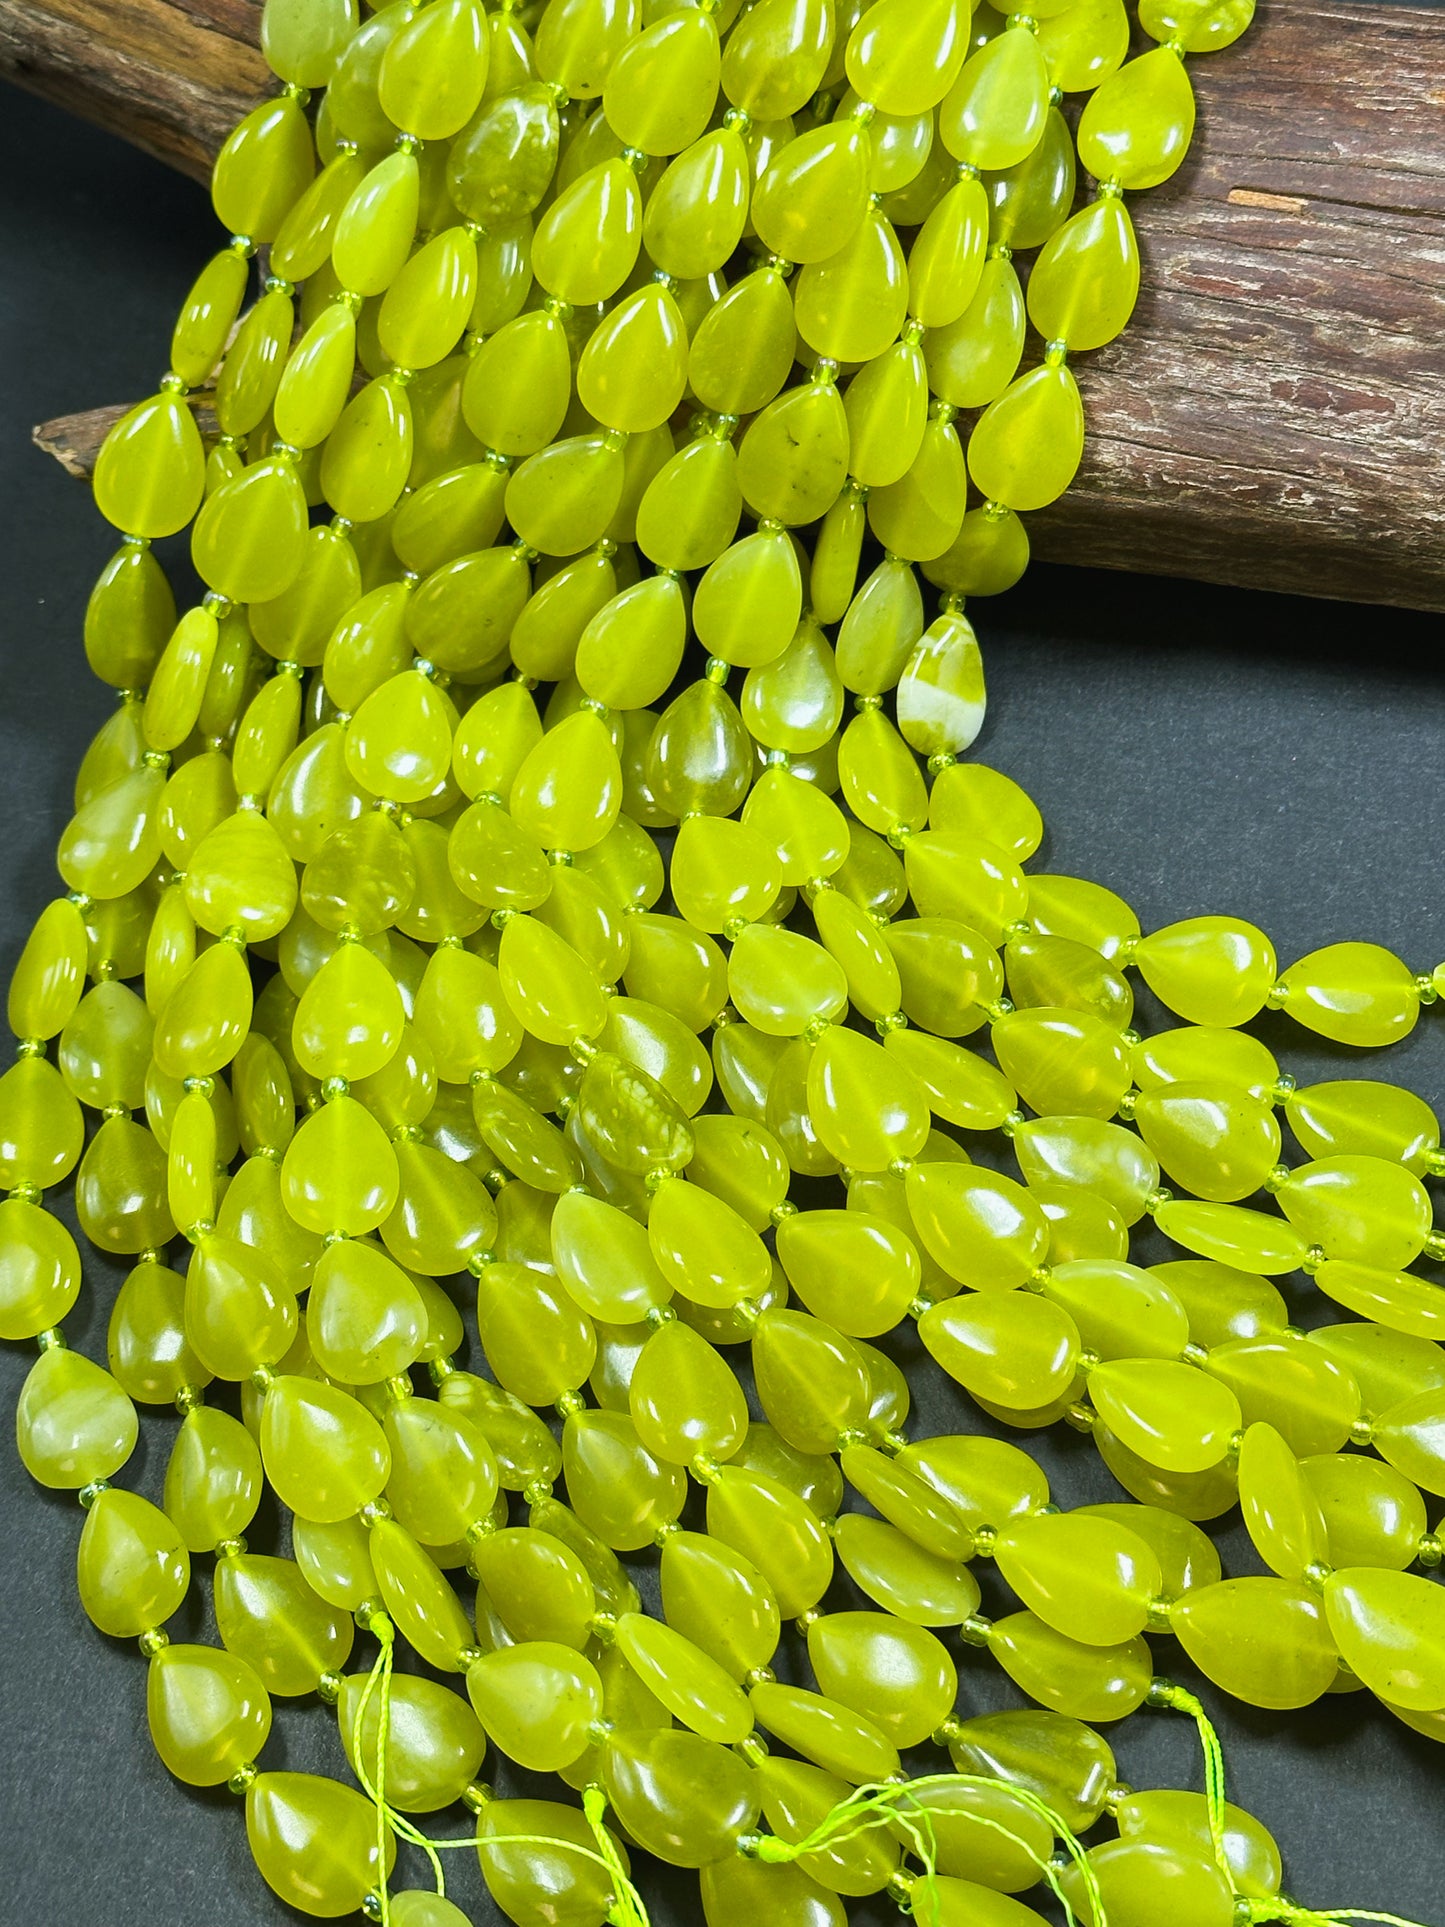 Natural Serpentine Jade Gemstone Bead 18x13mm Teardrop Shape, Beautiful Natural Yellow-Green Color Serpentine Great Quality Full Strand 15.5